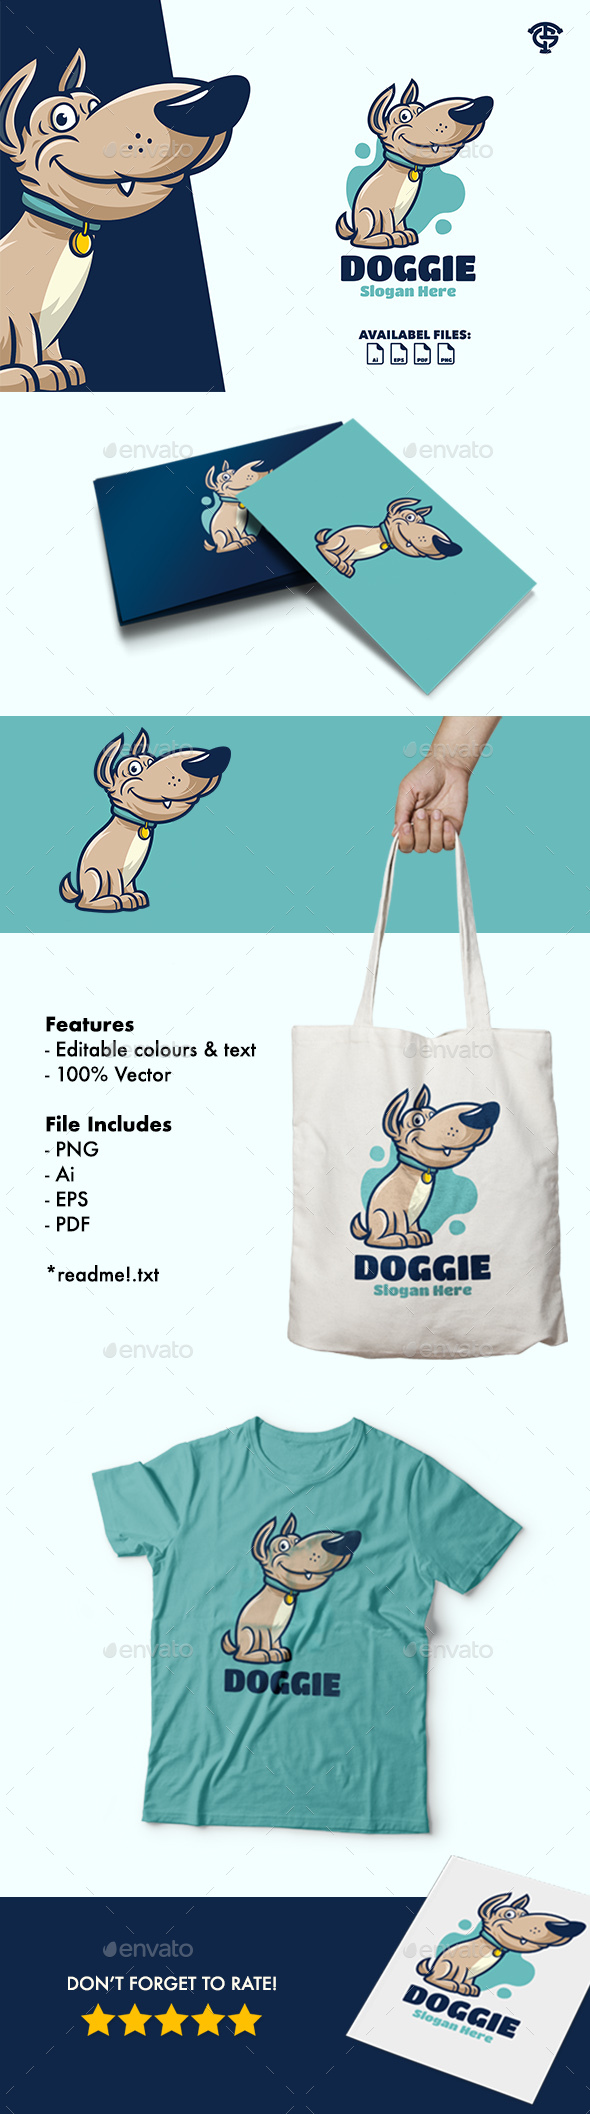 [DOWNLOAD]Doggie - Logo Mascot